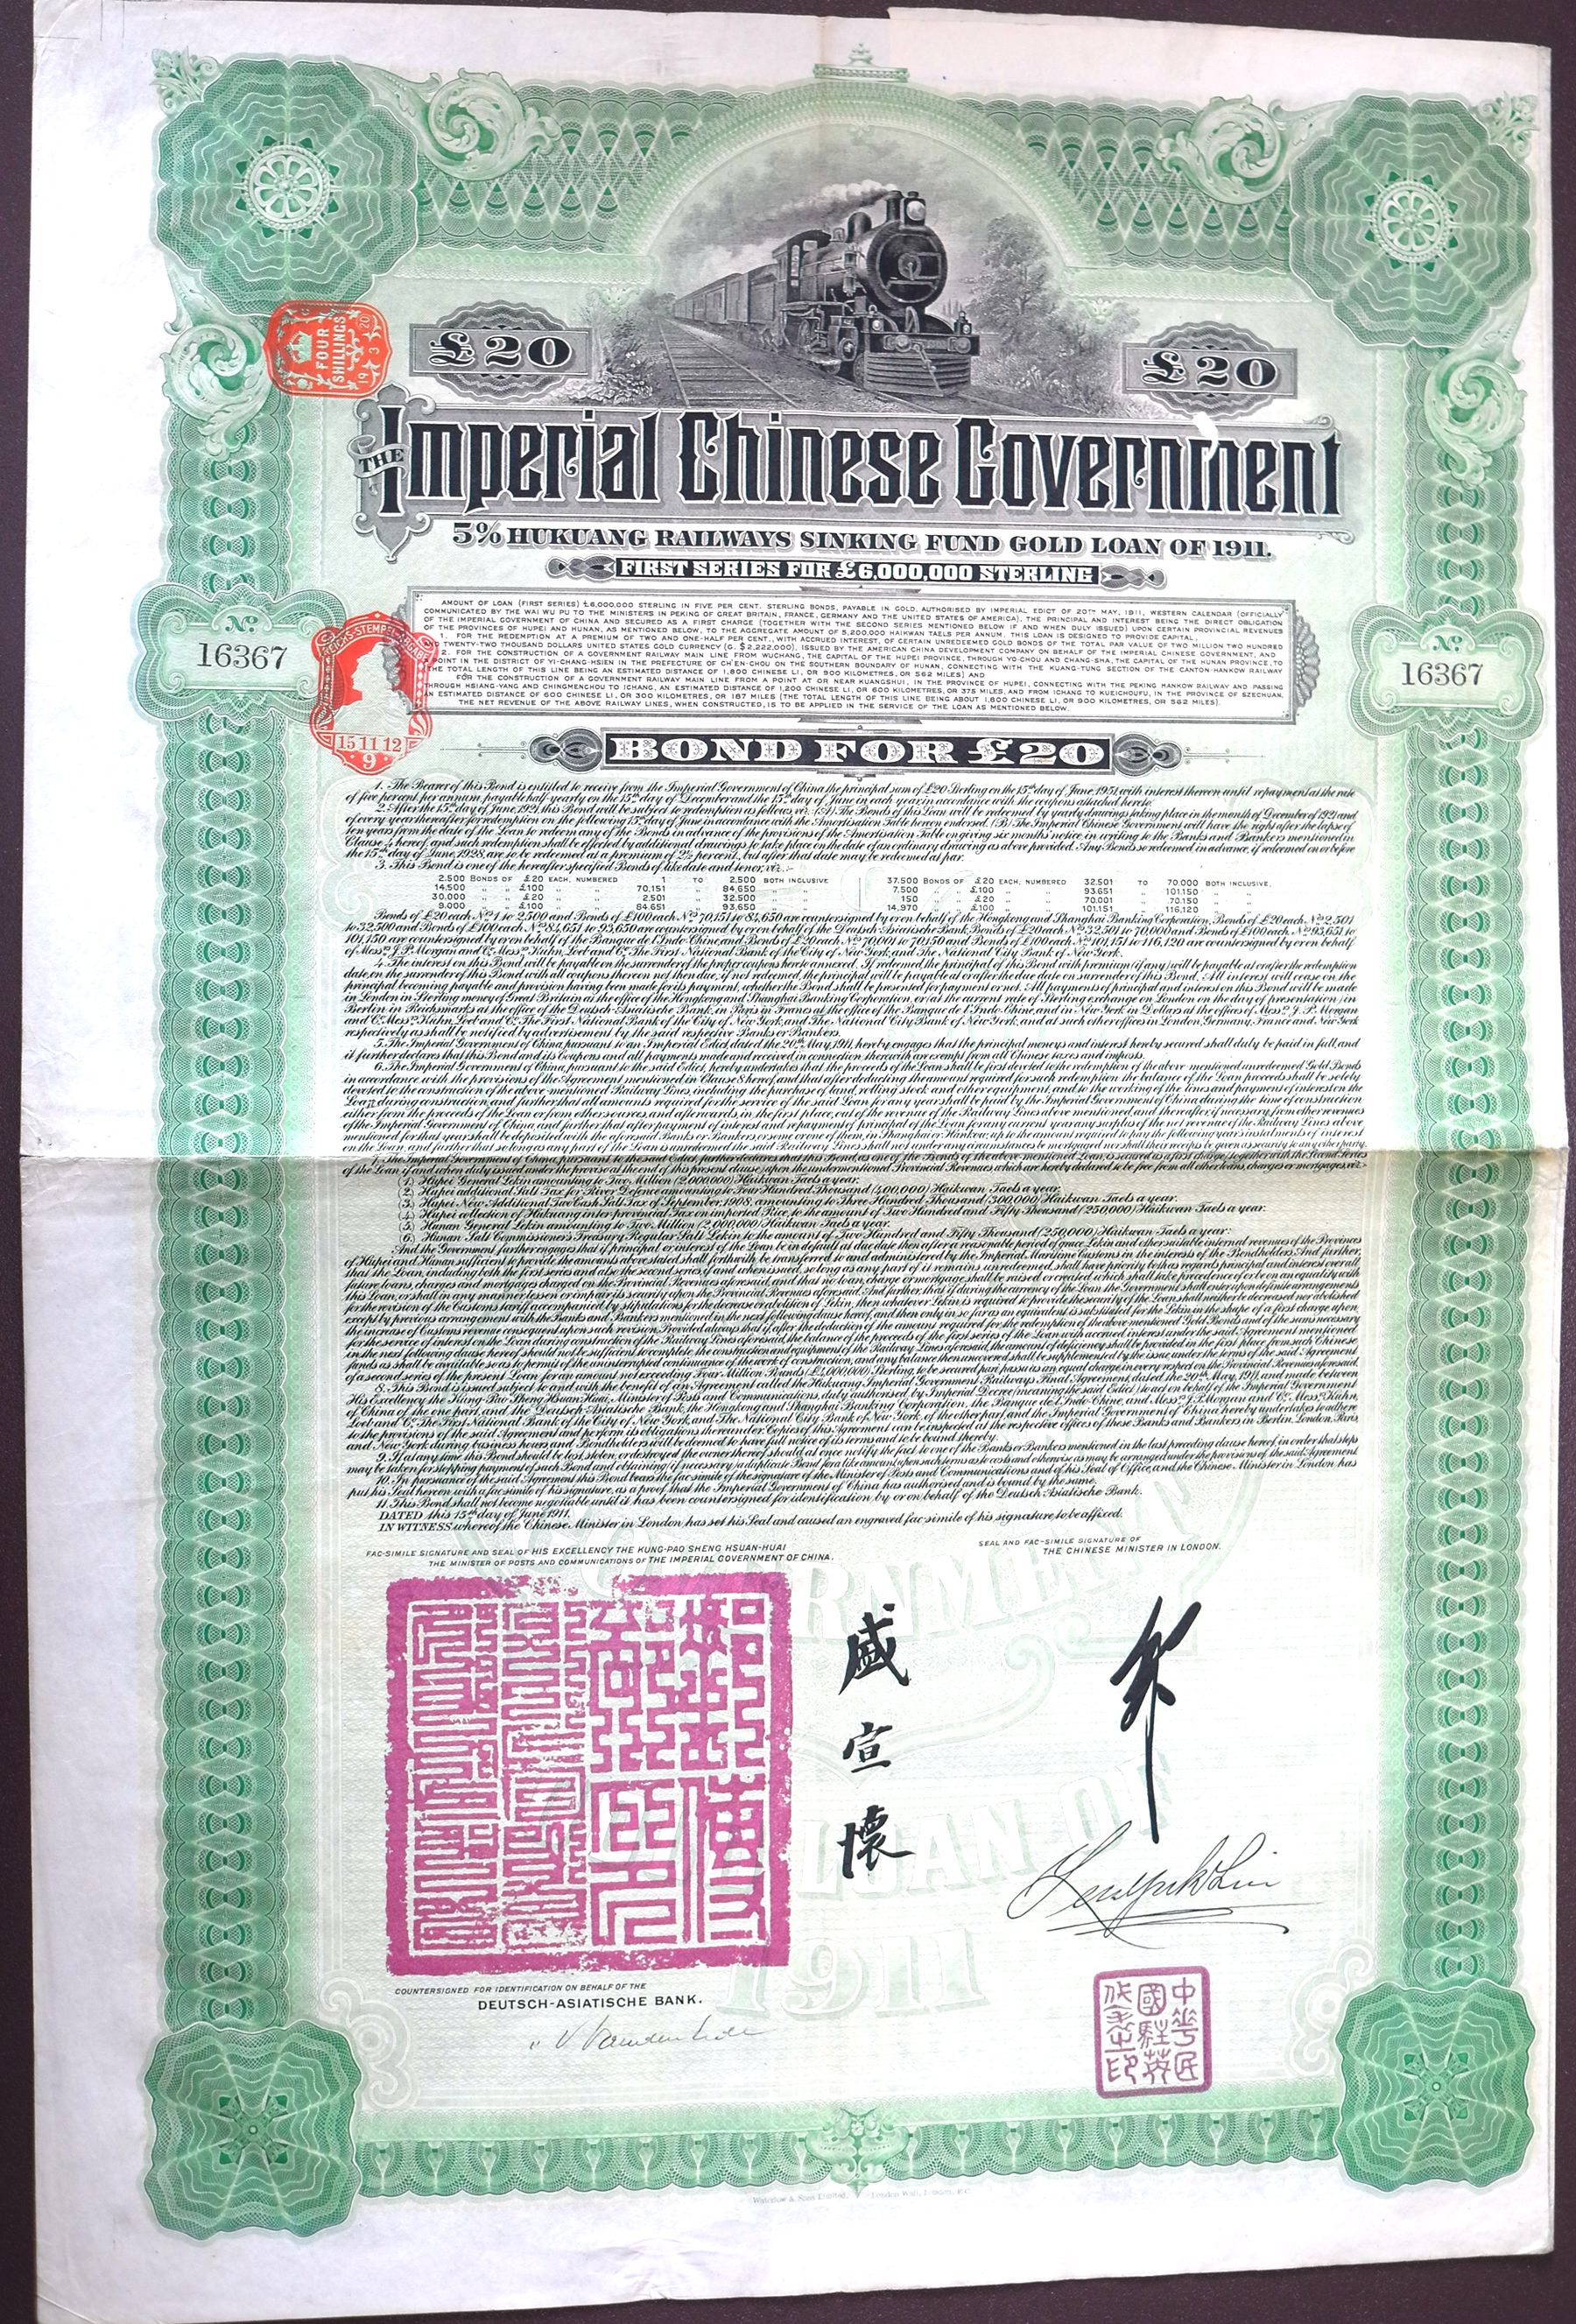 B9036, Imperial China 5% Hukuang Railway Bond, 20 Pound Sterling Loan 1911 DAB